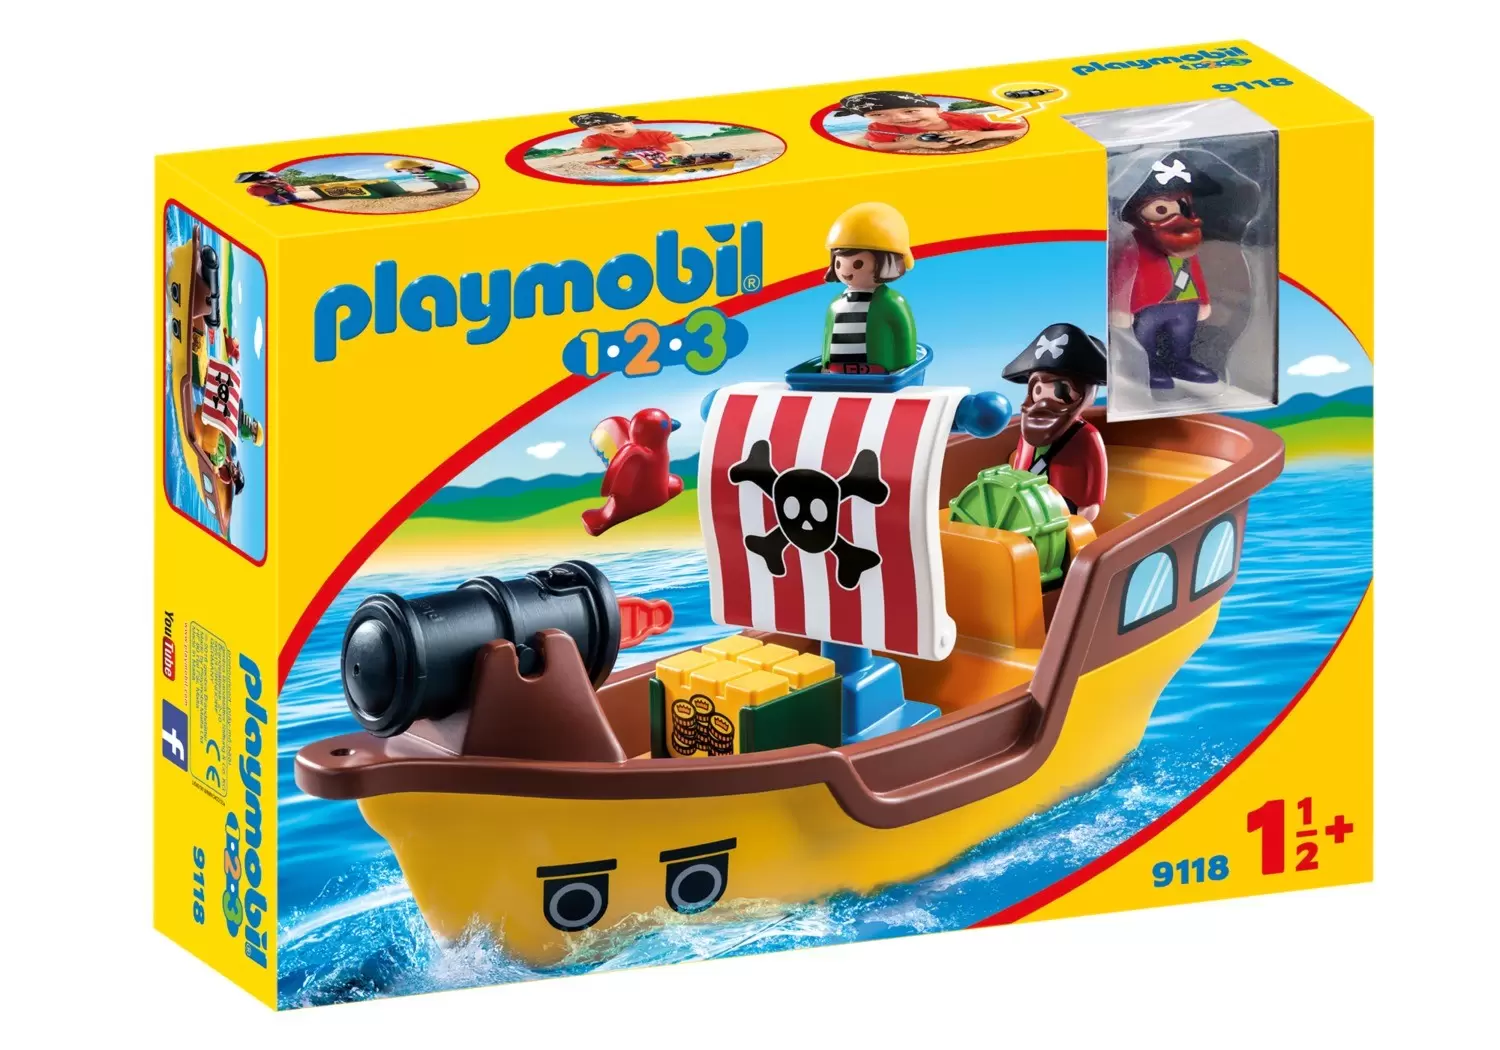 Playmobil 1.2.3 - Pirate ship